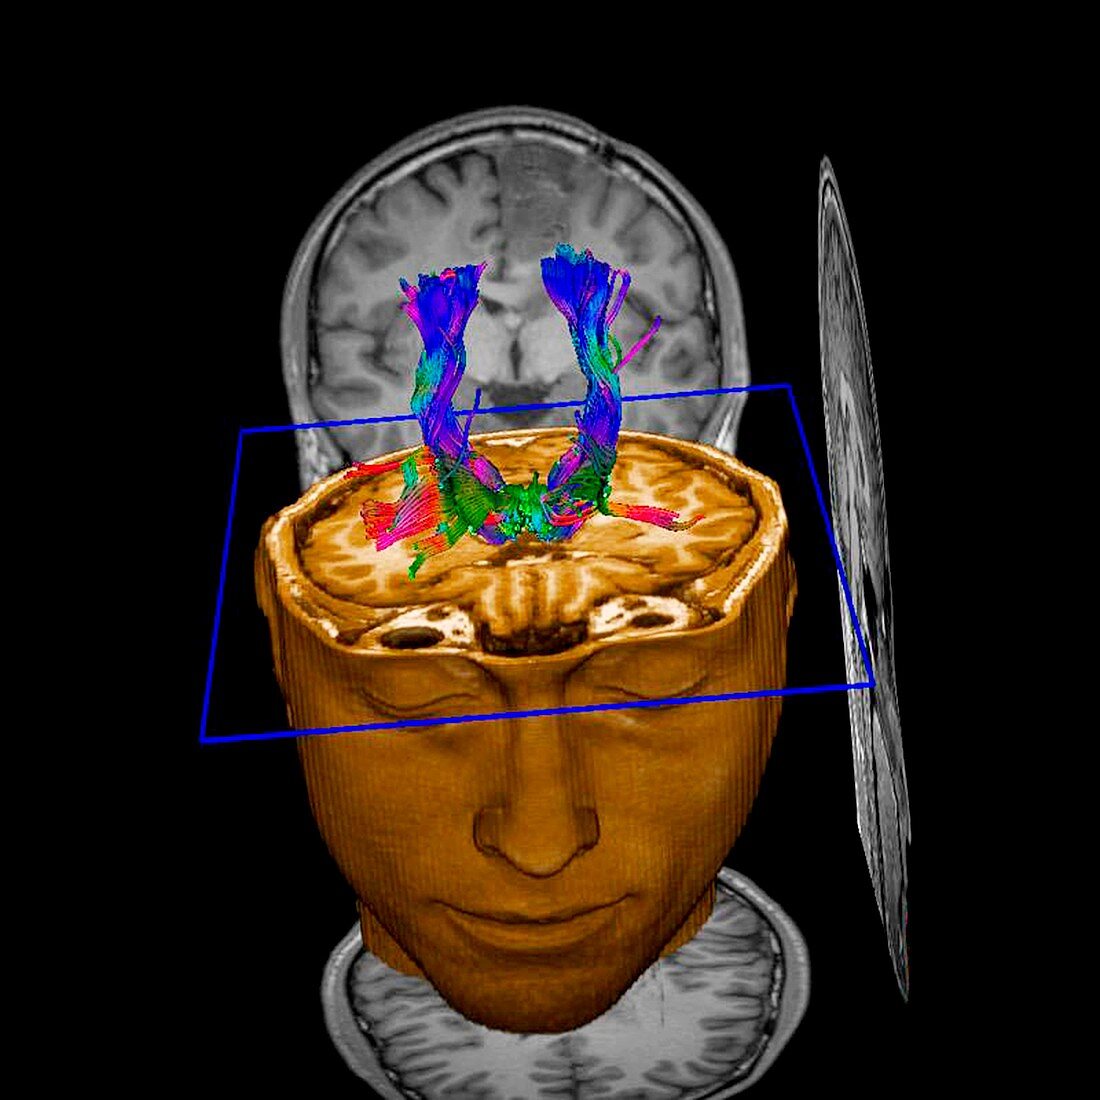 Brain tumour,DTI and MRI scans